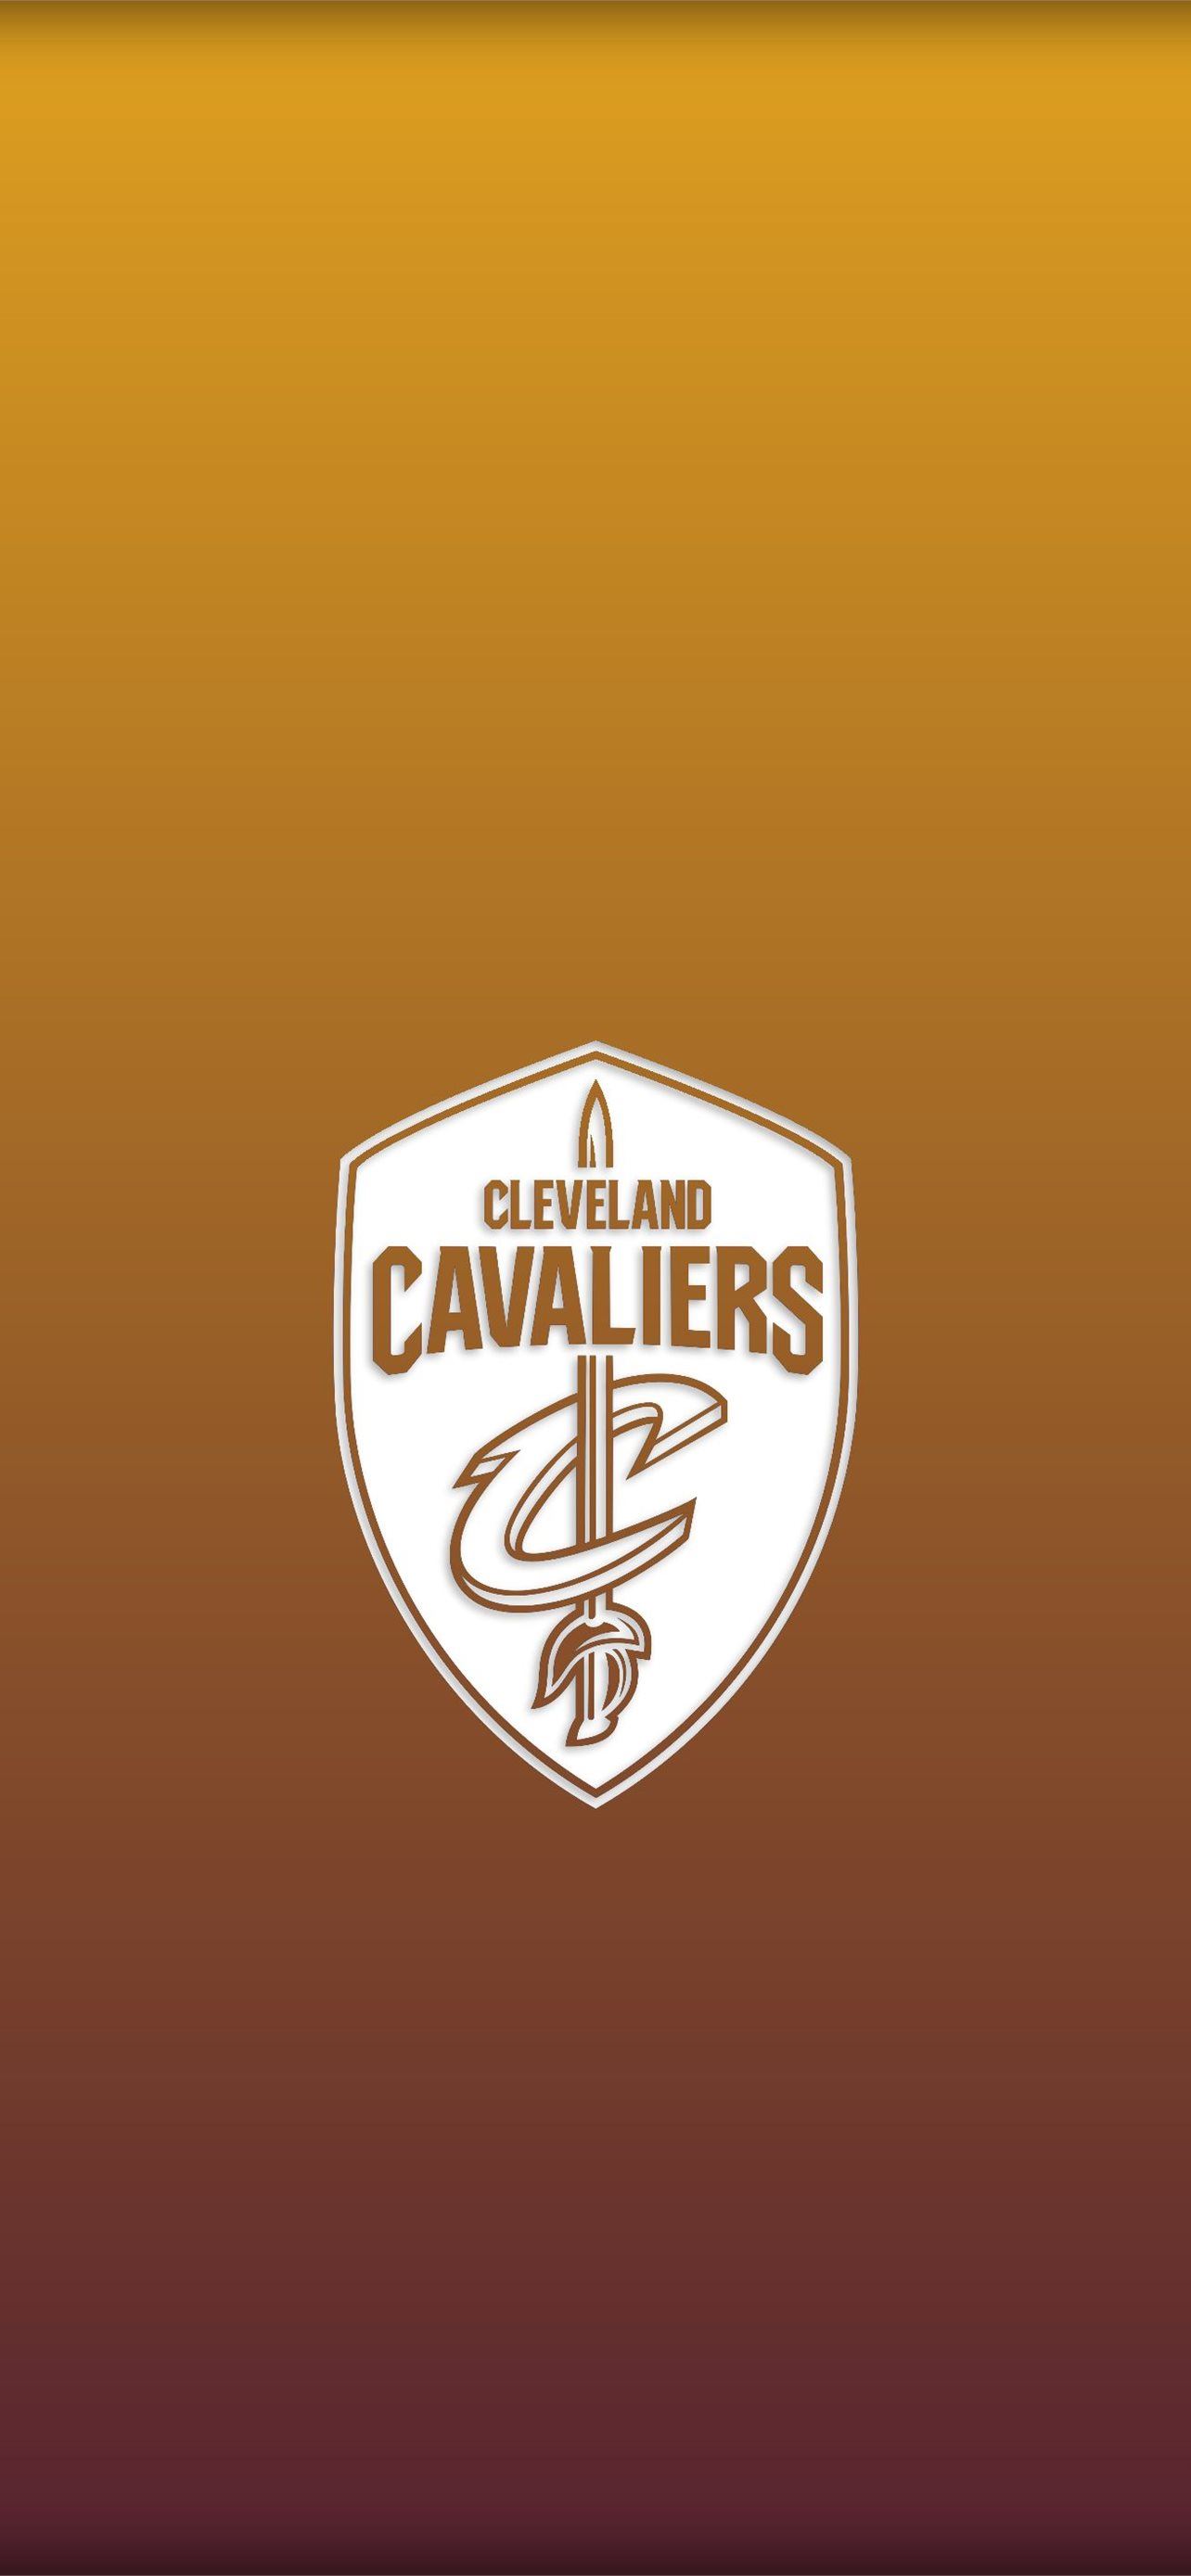 Cleveland Cavaliers on Twitter  NEW WALLPAPER  OneForTheLand  httpstcoG8P3hJ7Cko httpstcojK41K6nfCO  Twitter